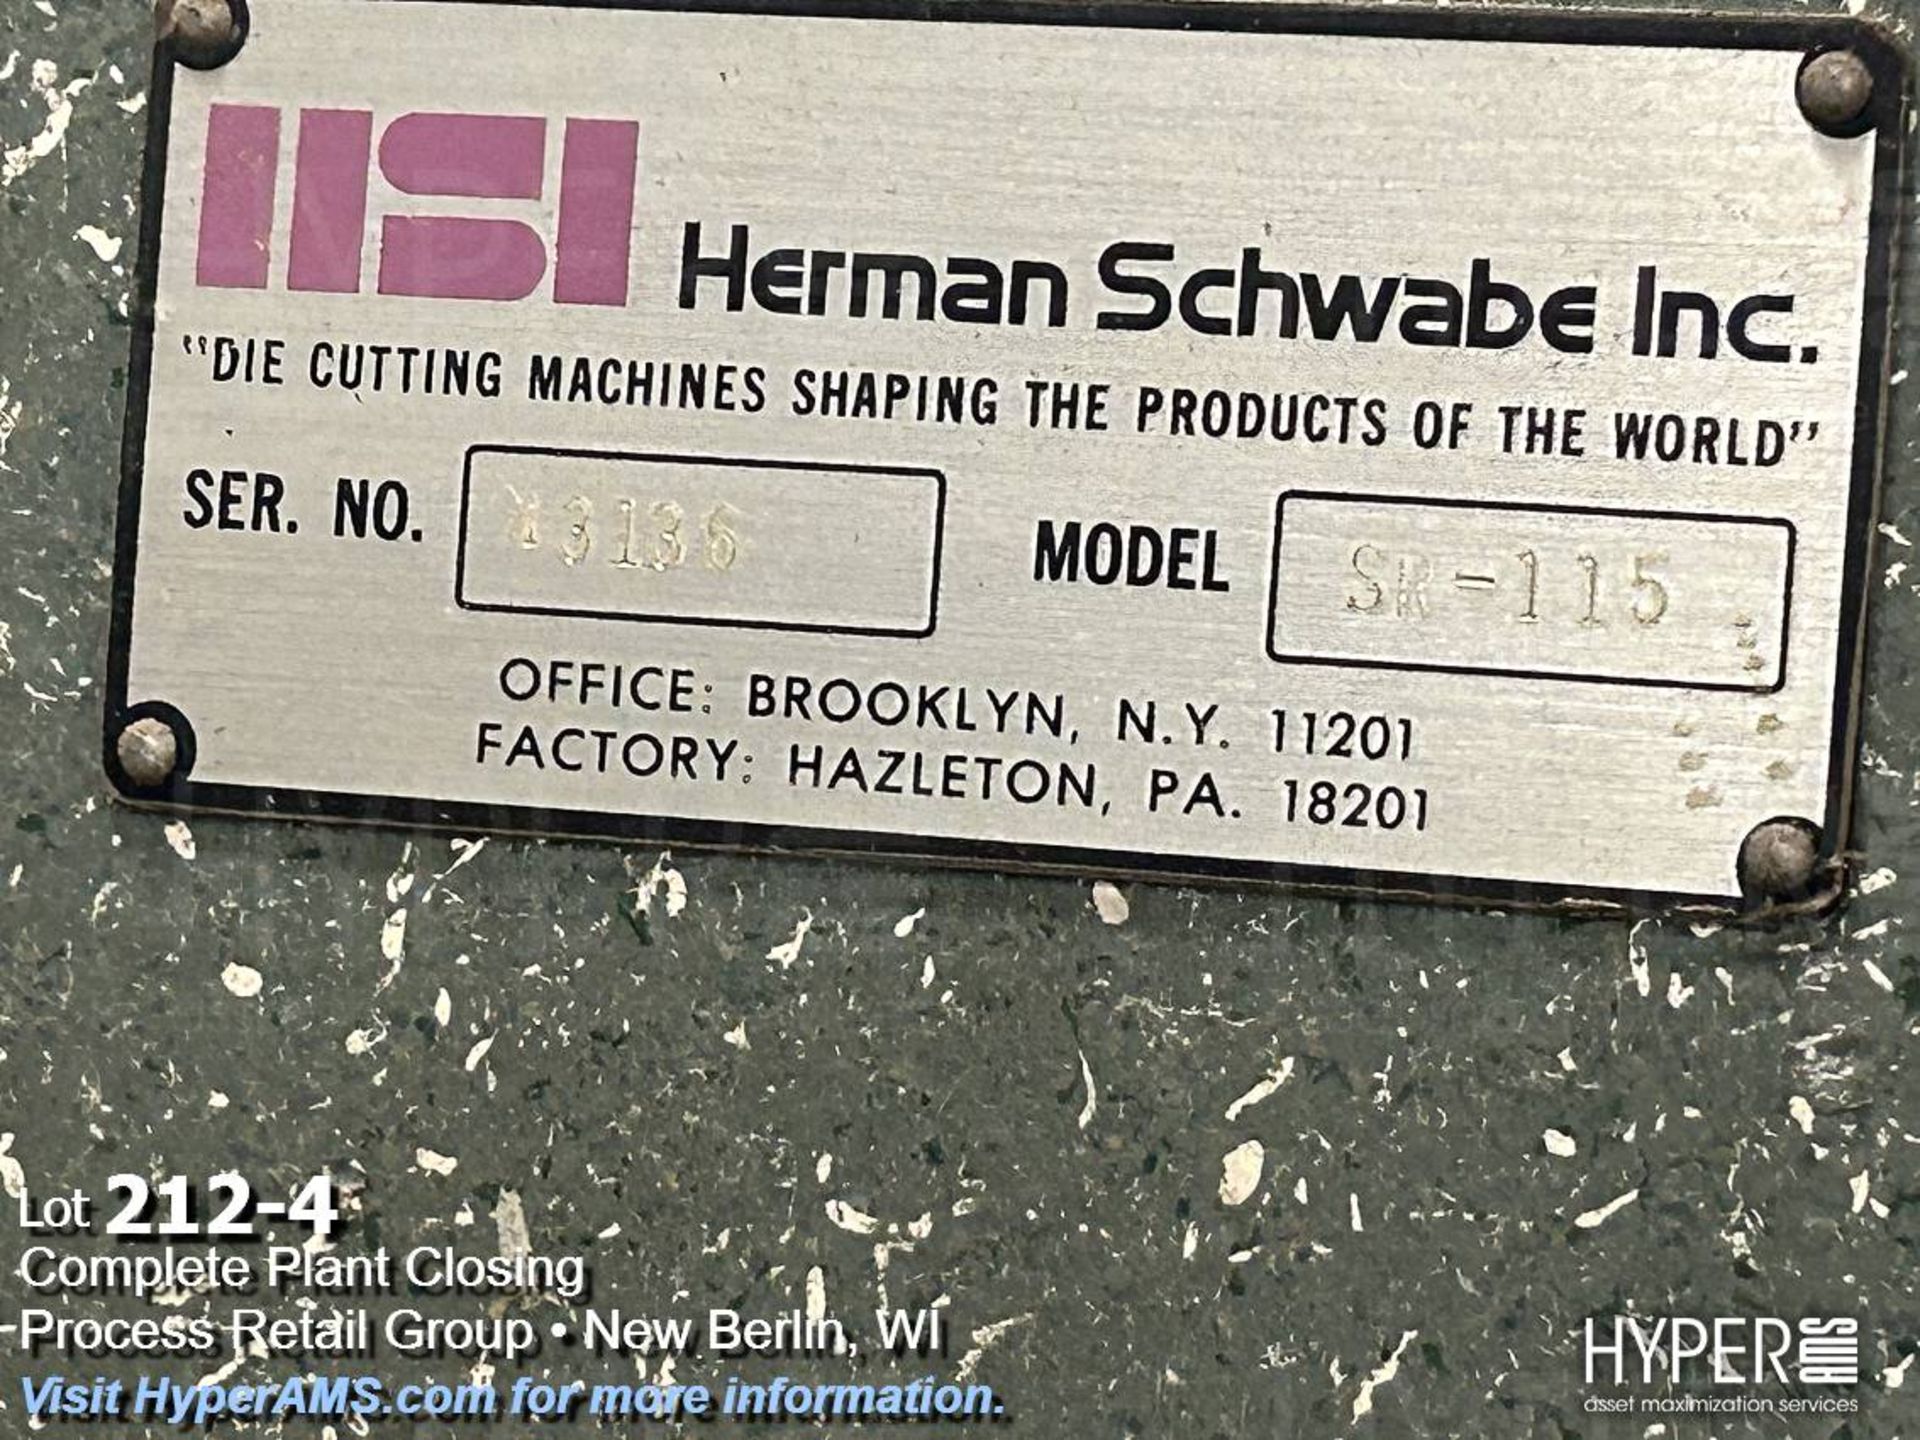 Herman Schwabe SR-115 Hydraulic, 60"W, 115 -Ton Die Cutter Beam Press - Image 4 of 8